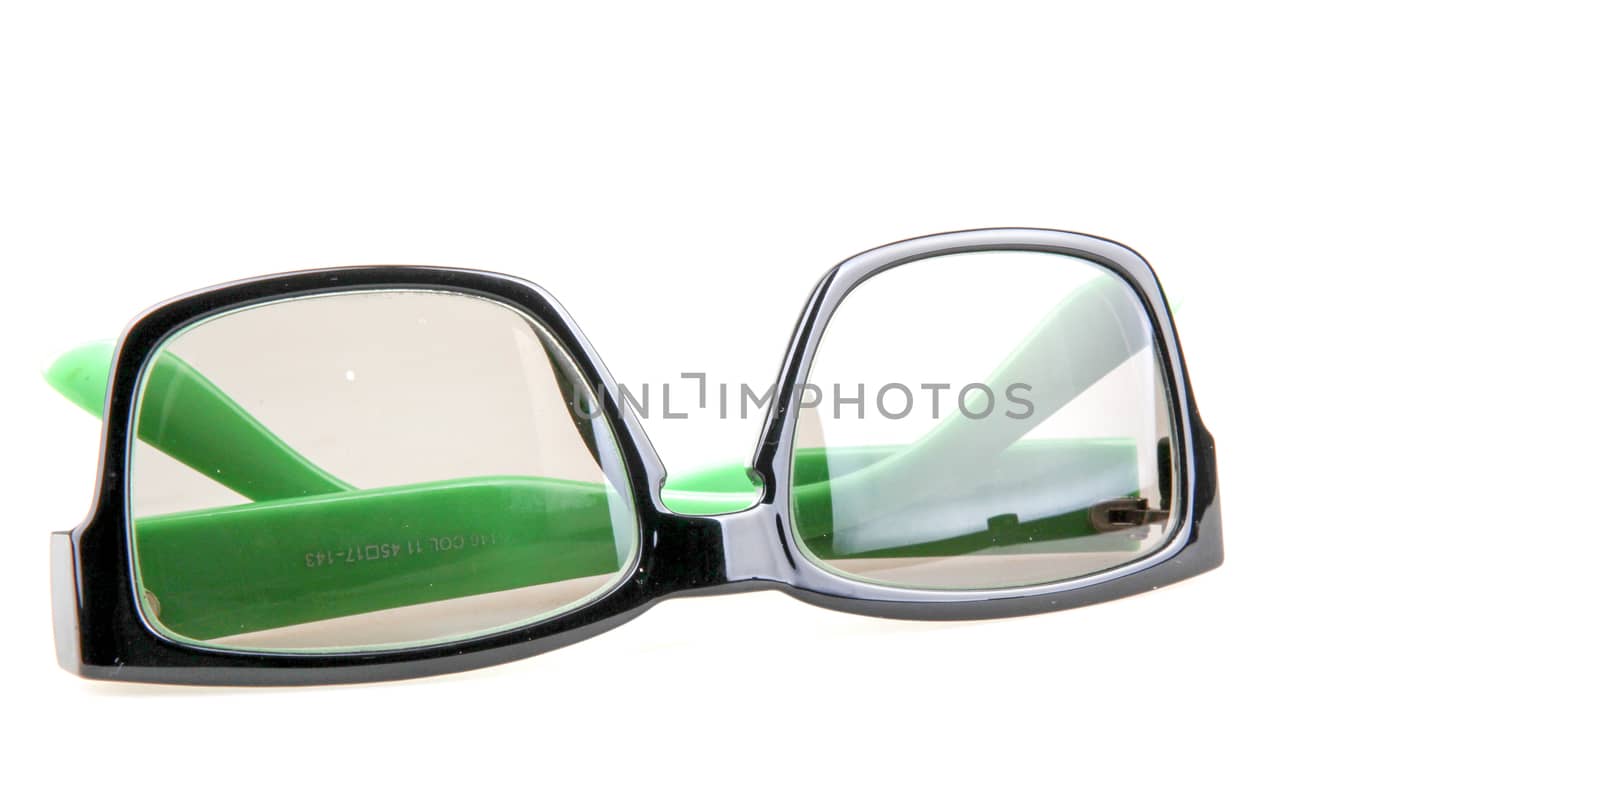 Eyeglasses With Green Rim by nenovbrothers